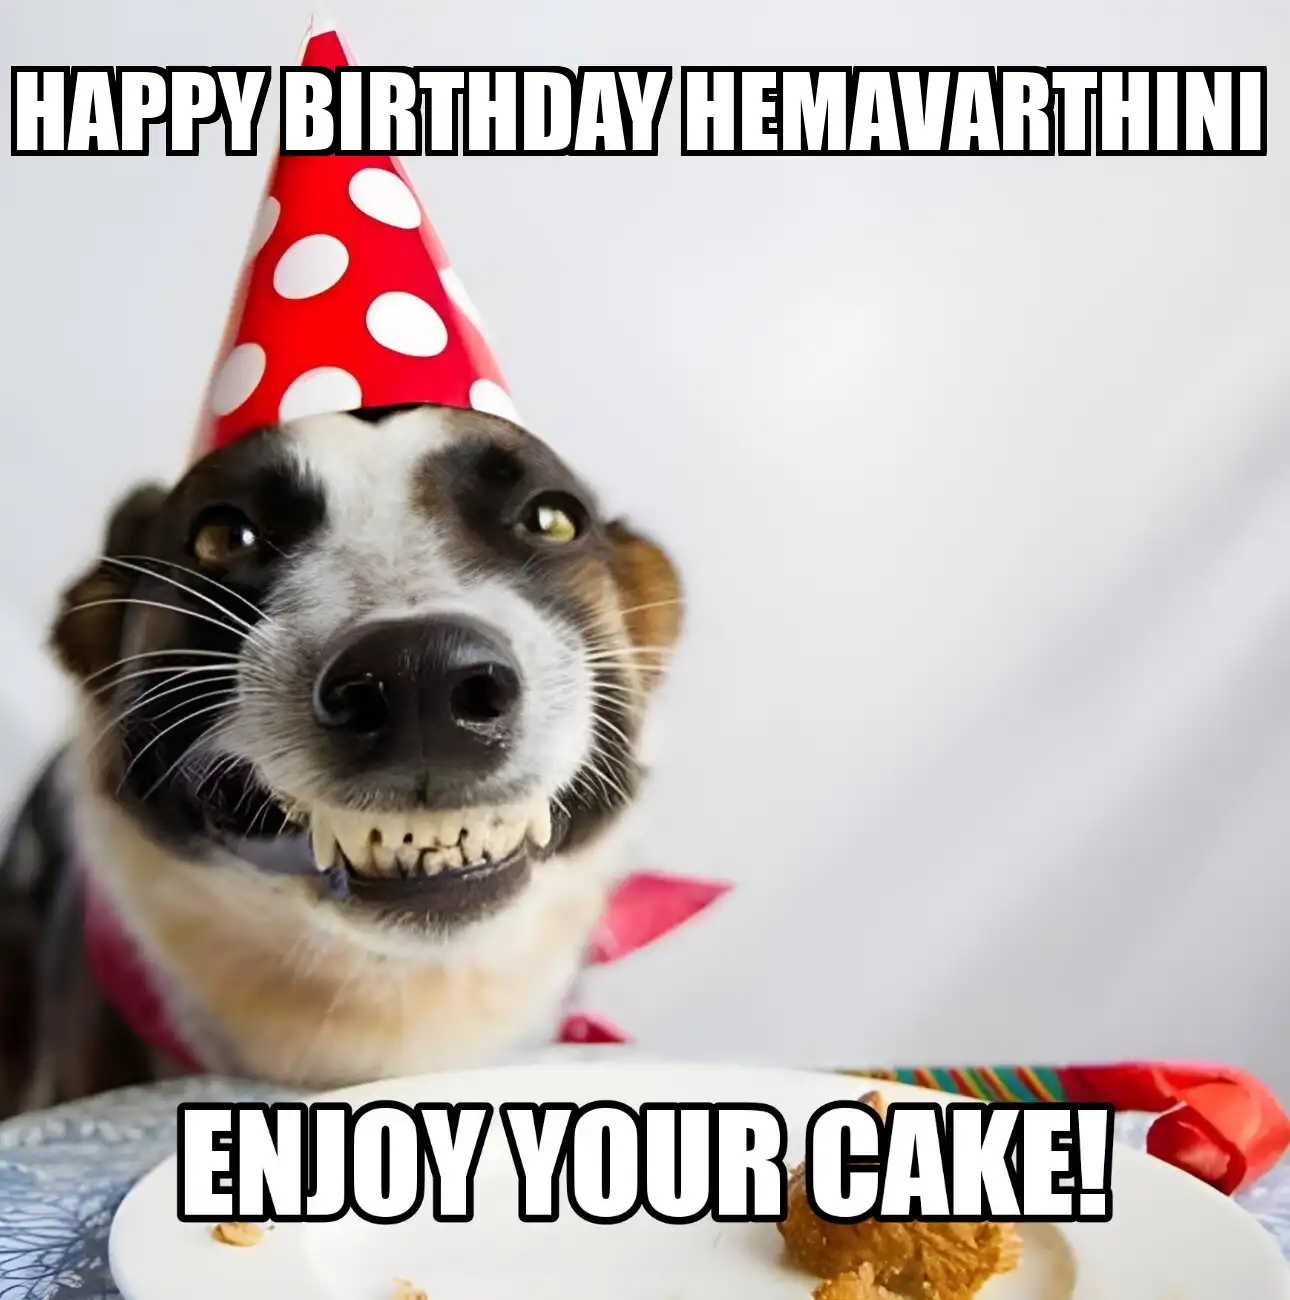 Happy Birthday Hemavarthini Enjoy Your Cake Dog Meme